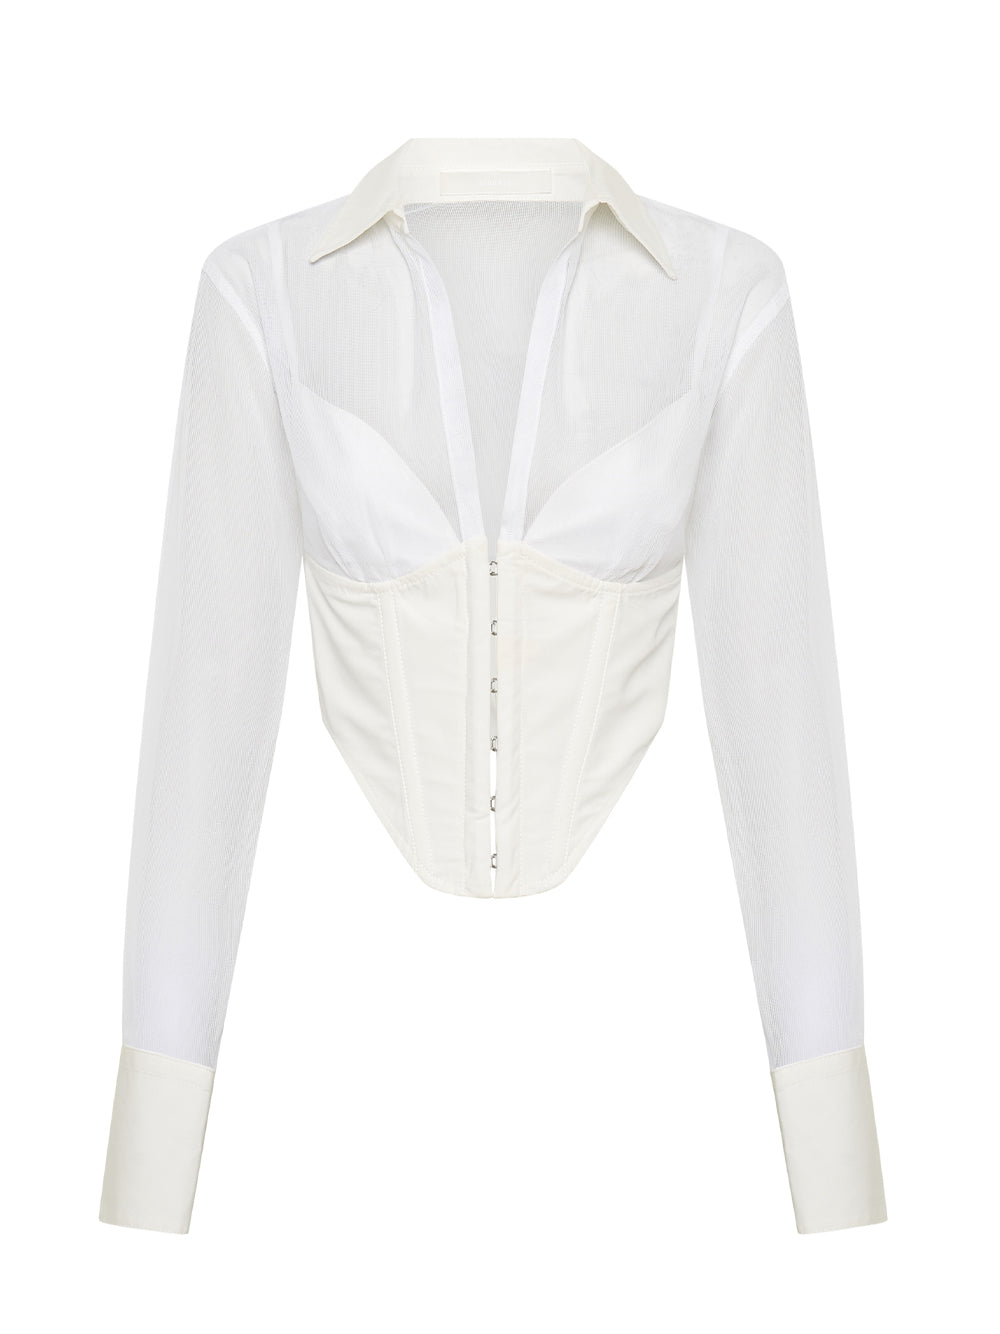 Grid Corset Shirt (White)